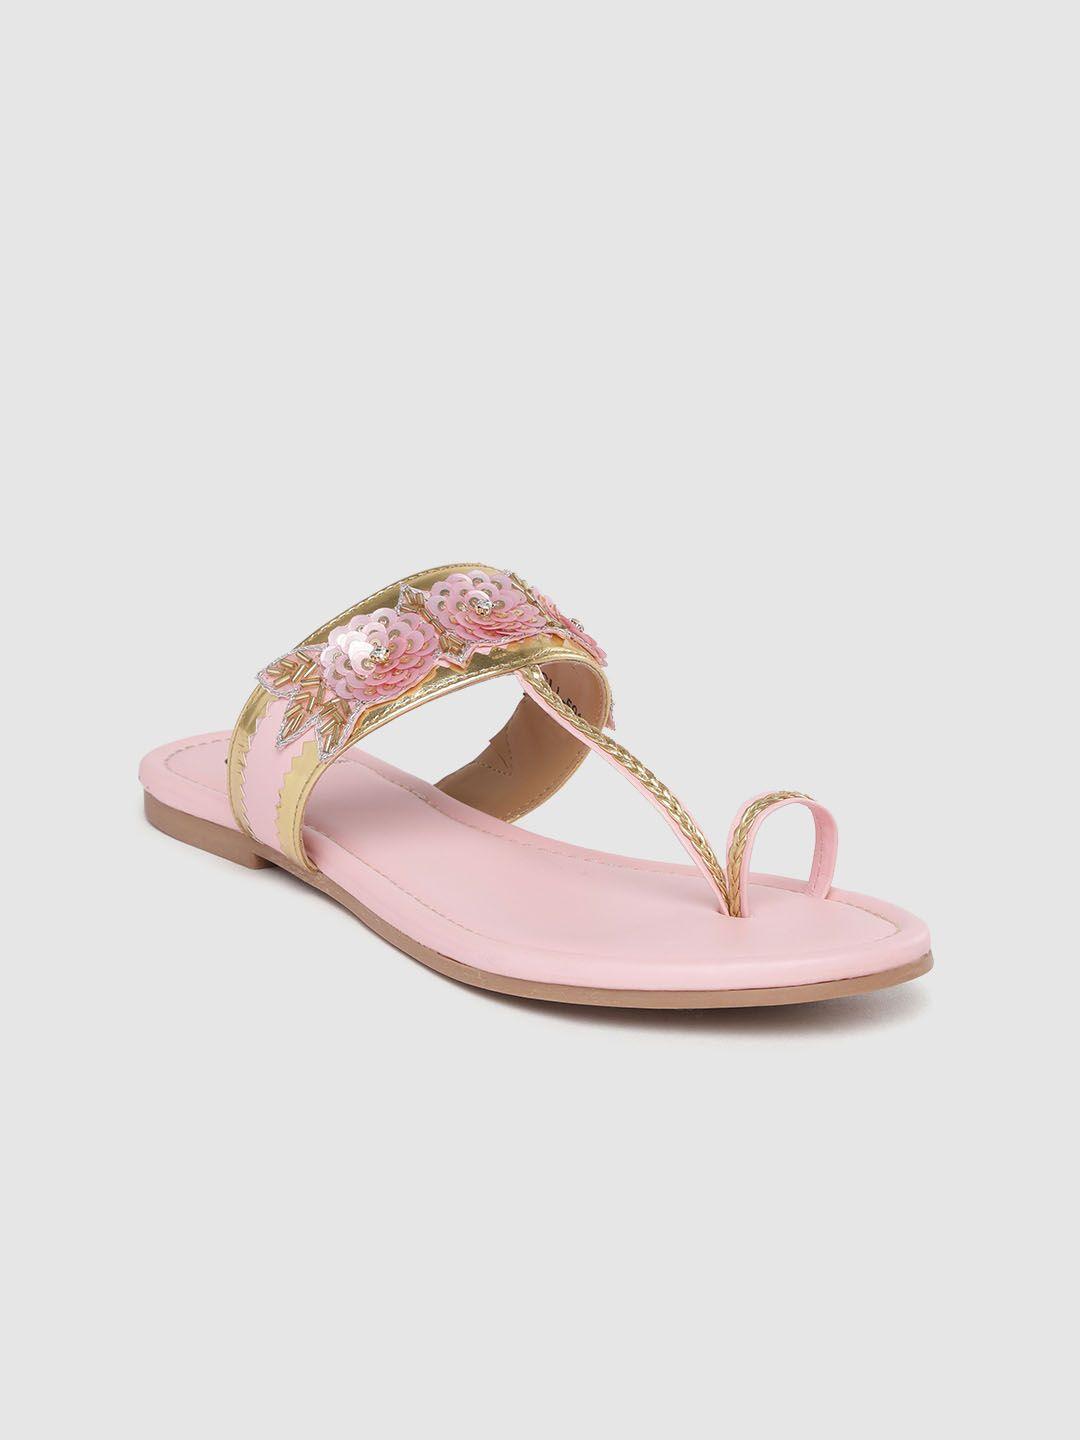 carlton london women pink & gold-toned embellished braided one toe flats